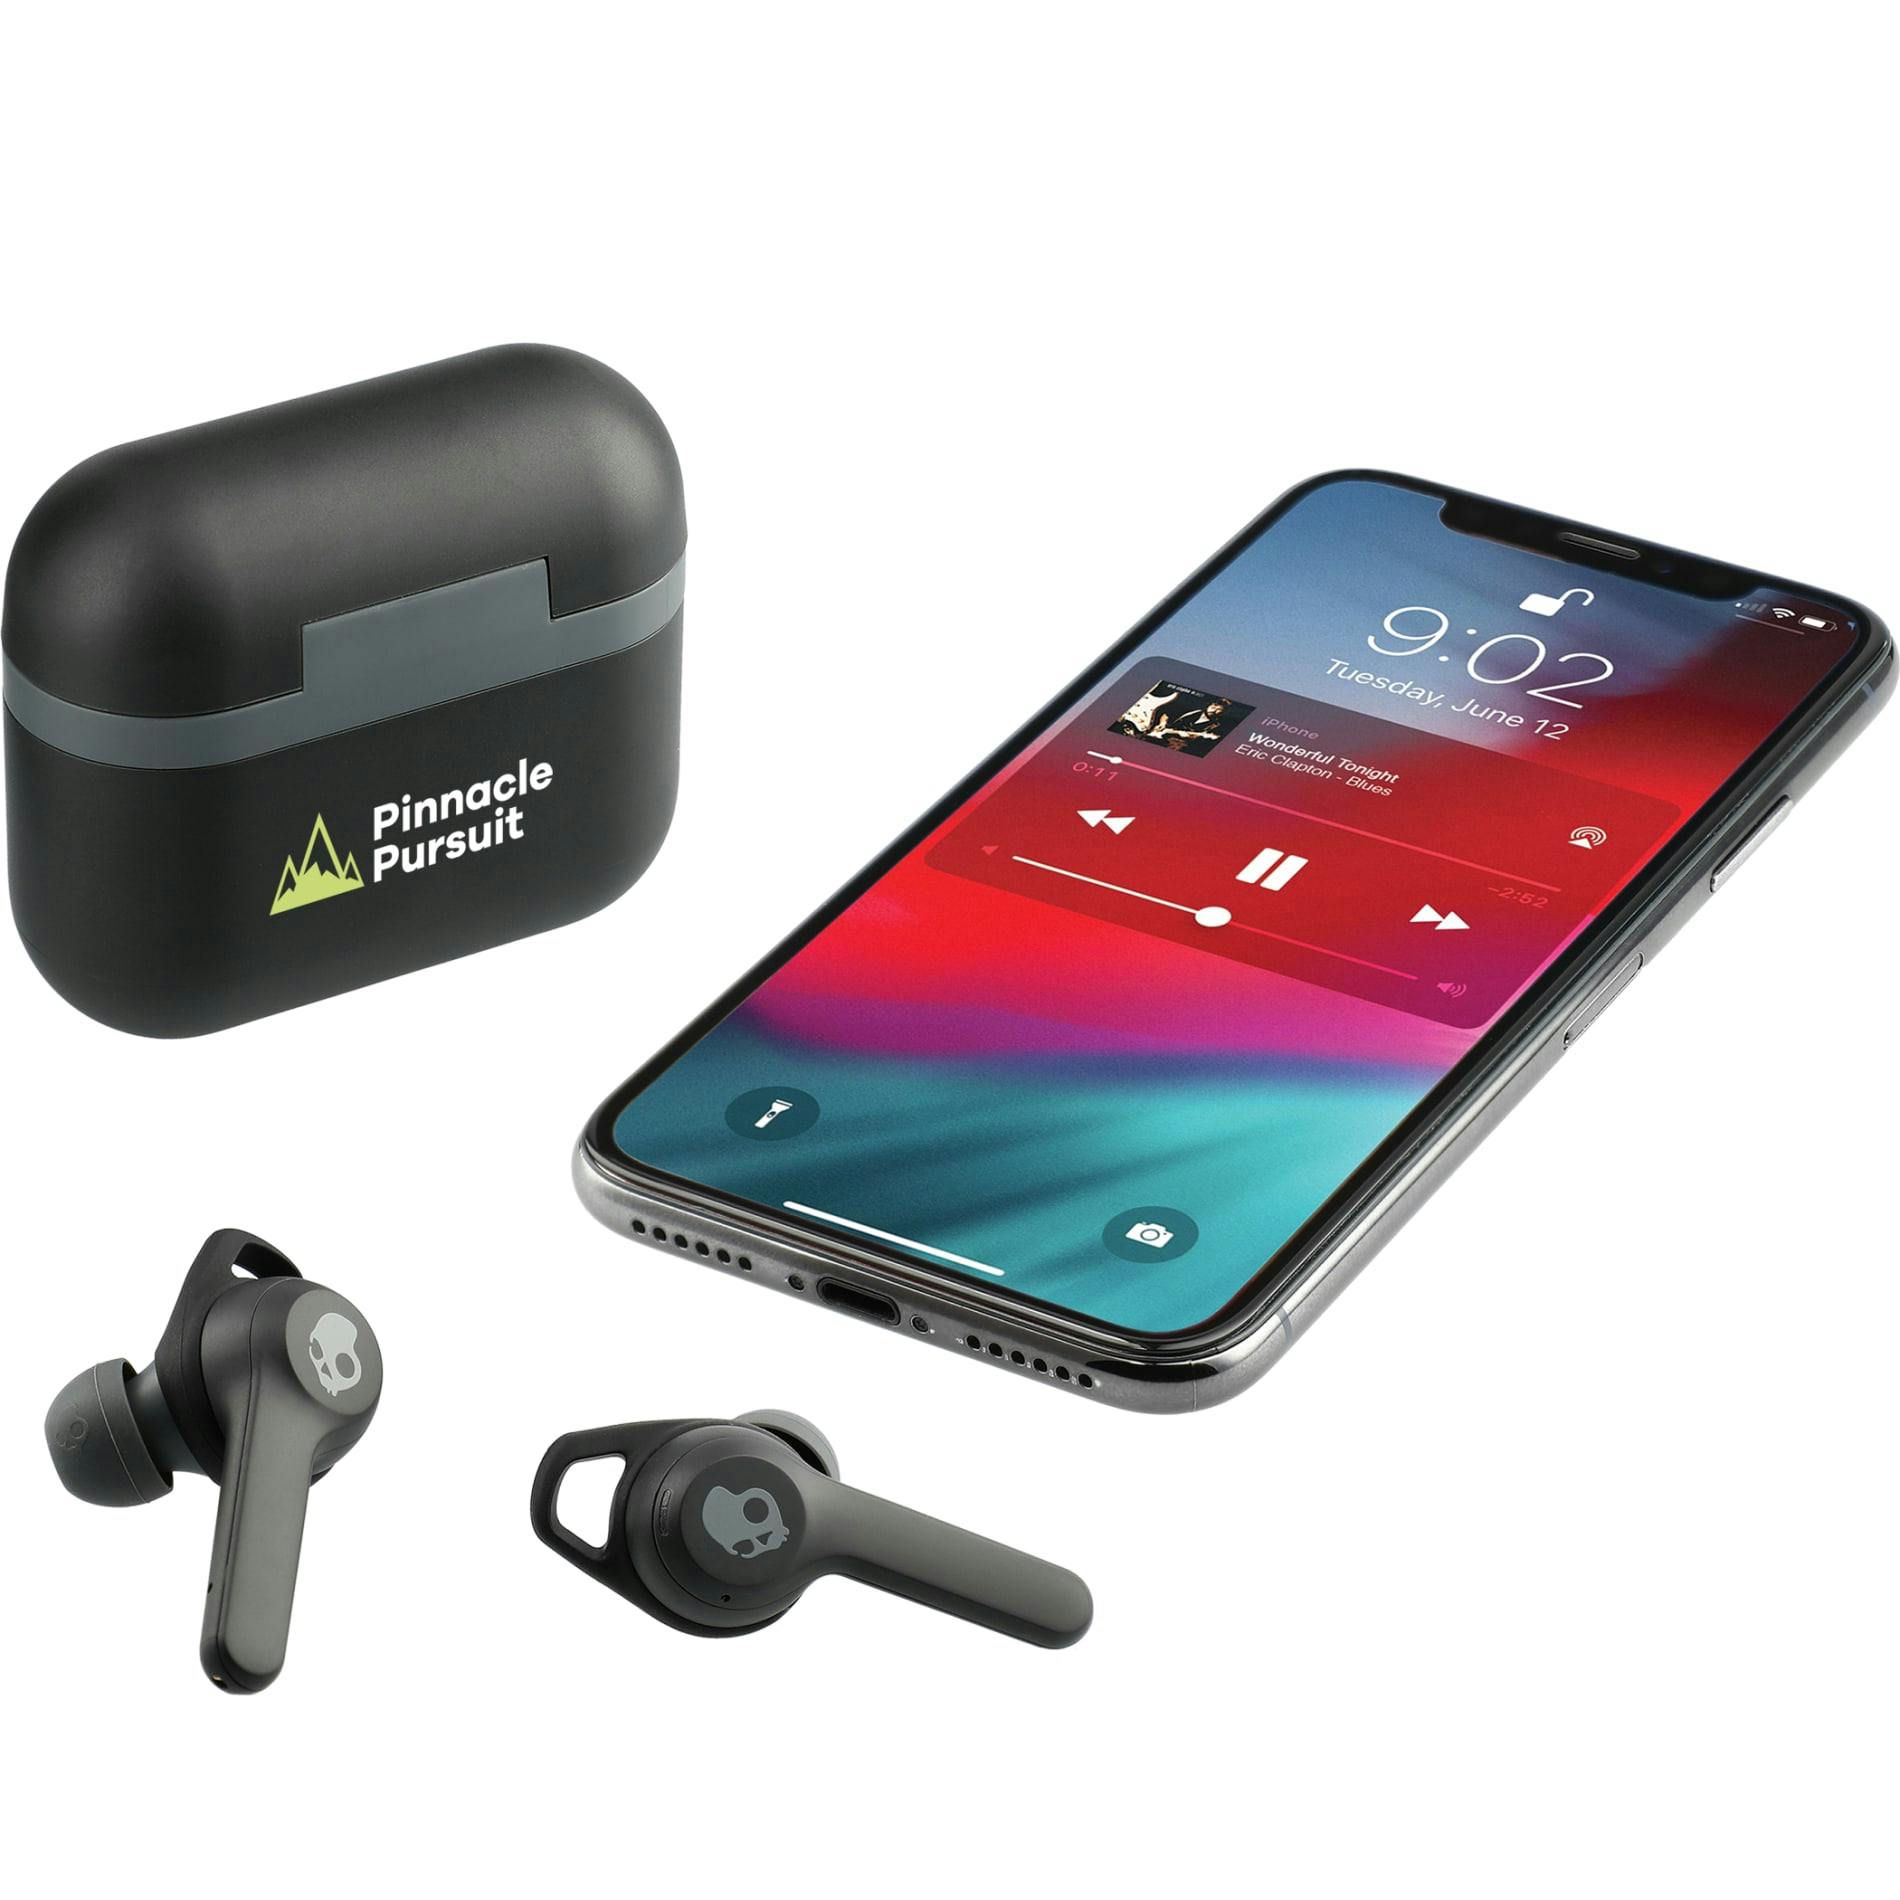 Skullcandy Indy Evo True Wireless Bluetooth Earbud - additional Image 4